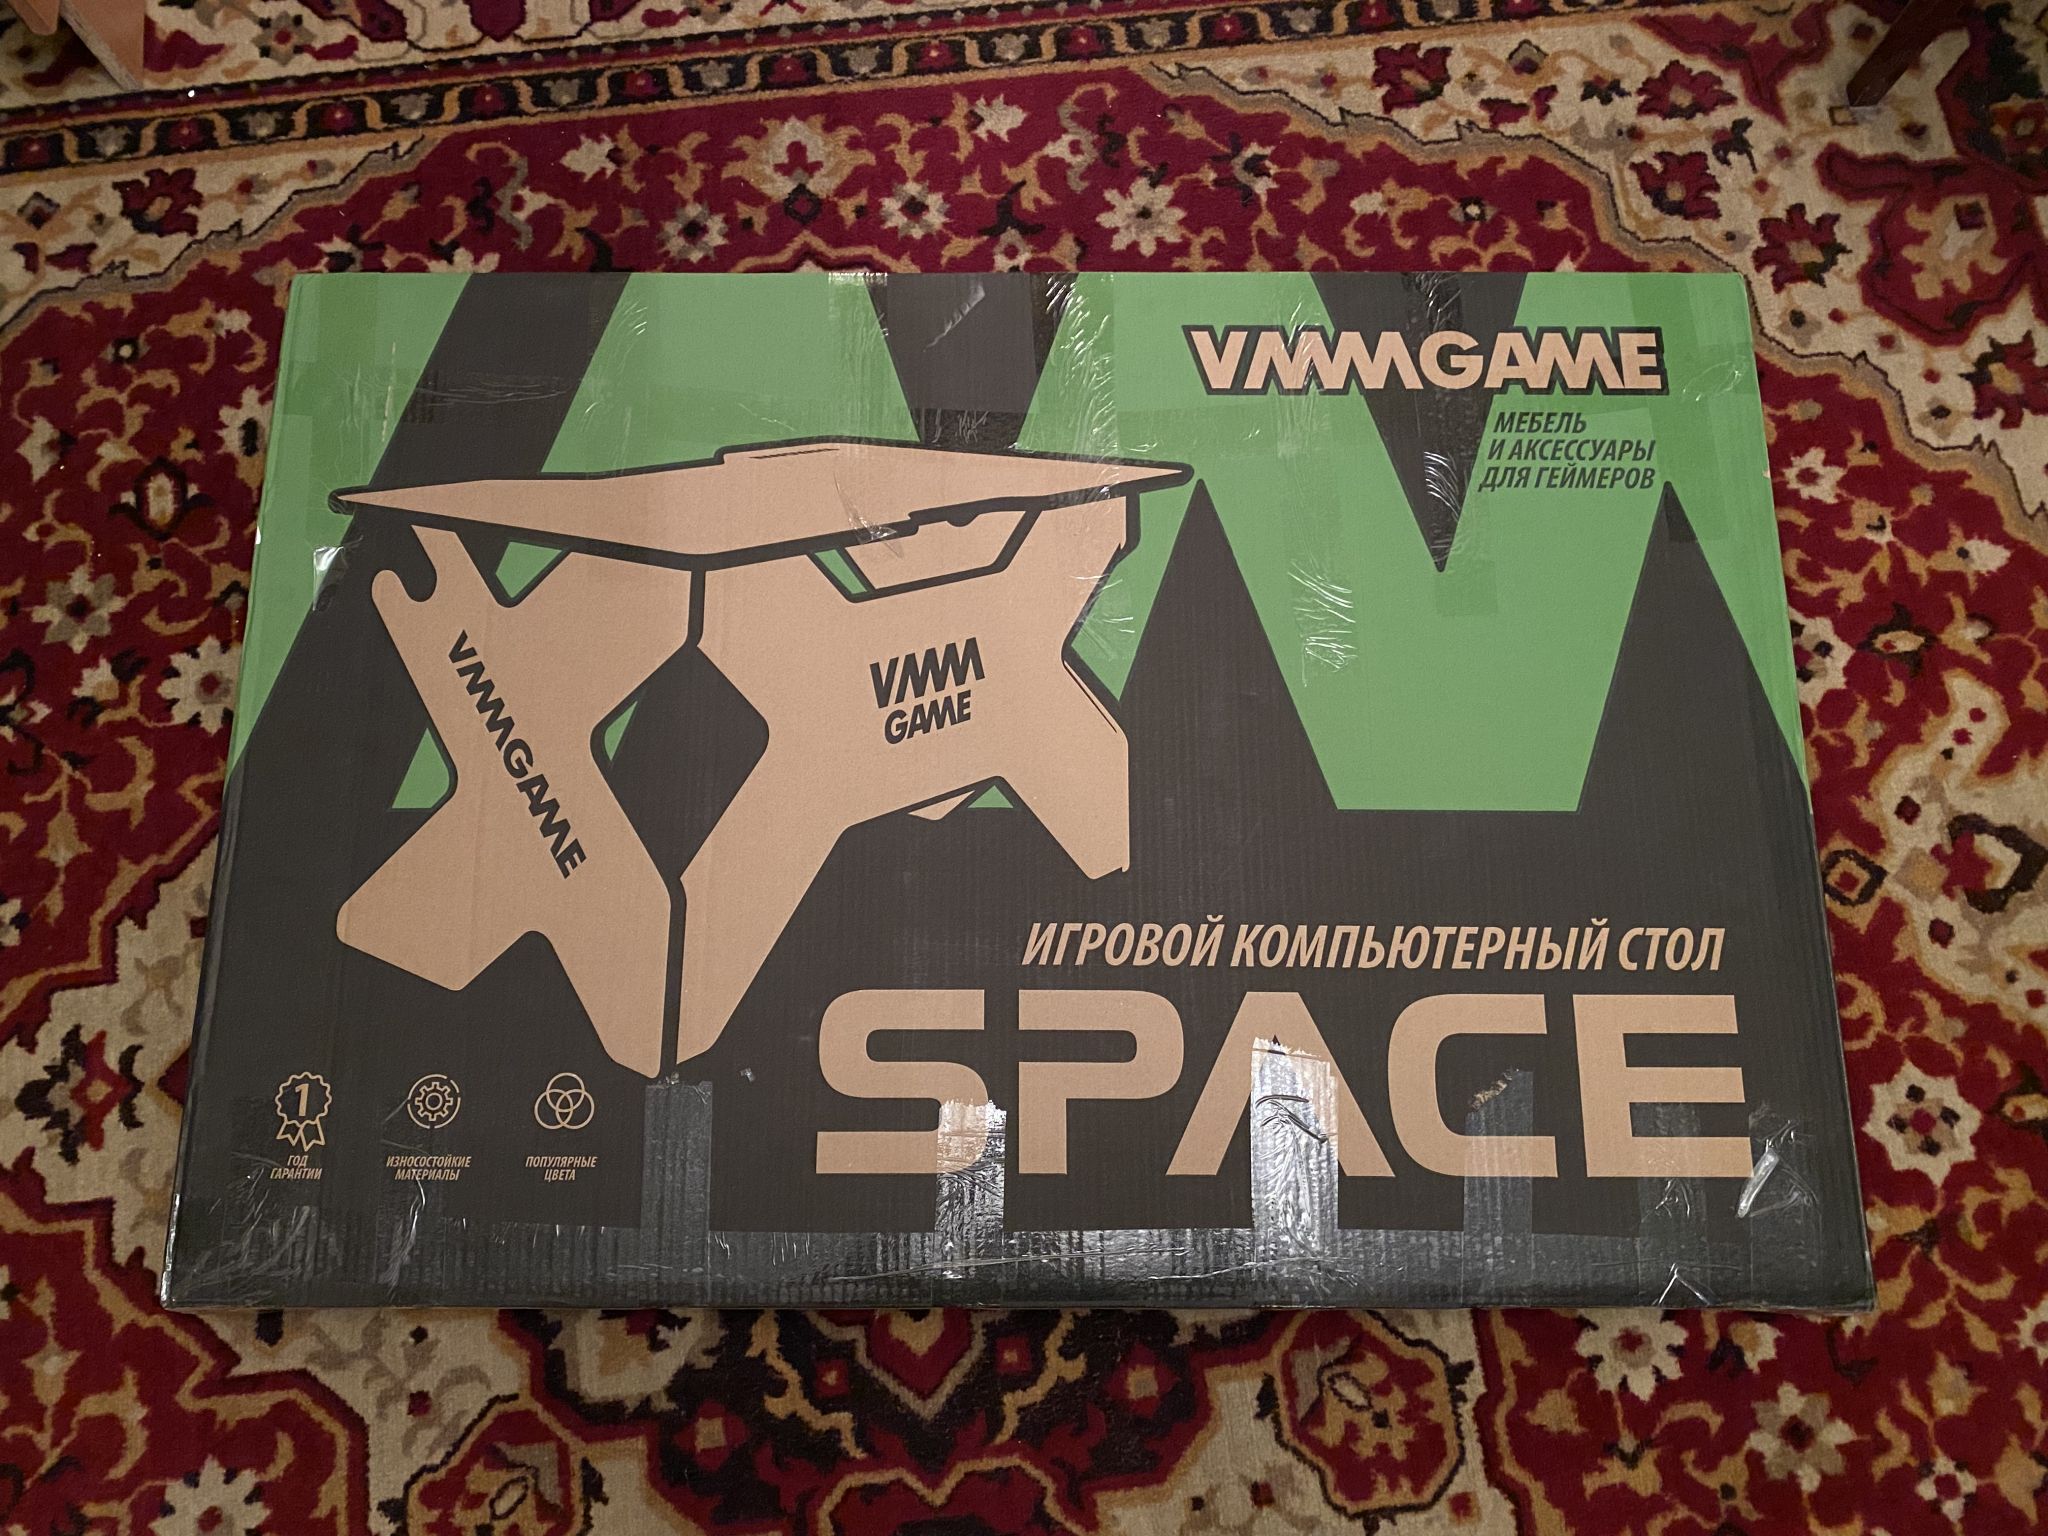 Vmmgame space. Игровой компьютерный стол vmmgame Space Lunar 140. Стол компьютерный игровой vmmgame Space Lunar (St-2sl). Vmmgame Space Lunar (St-2sl) серебристый. Vmmgame one Lunar.